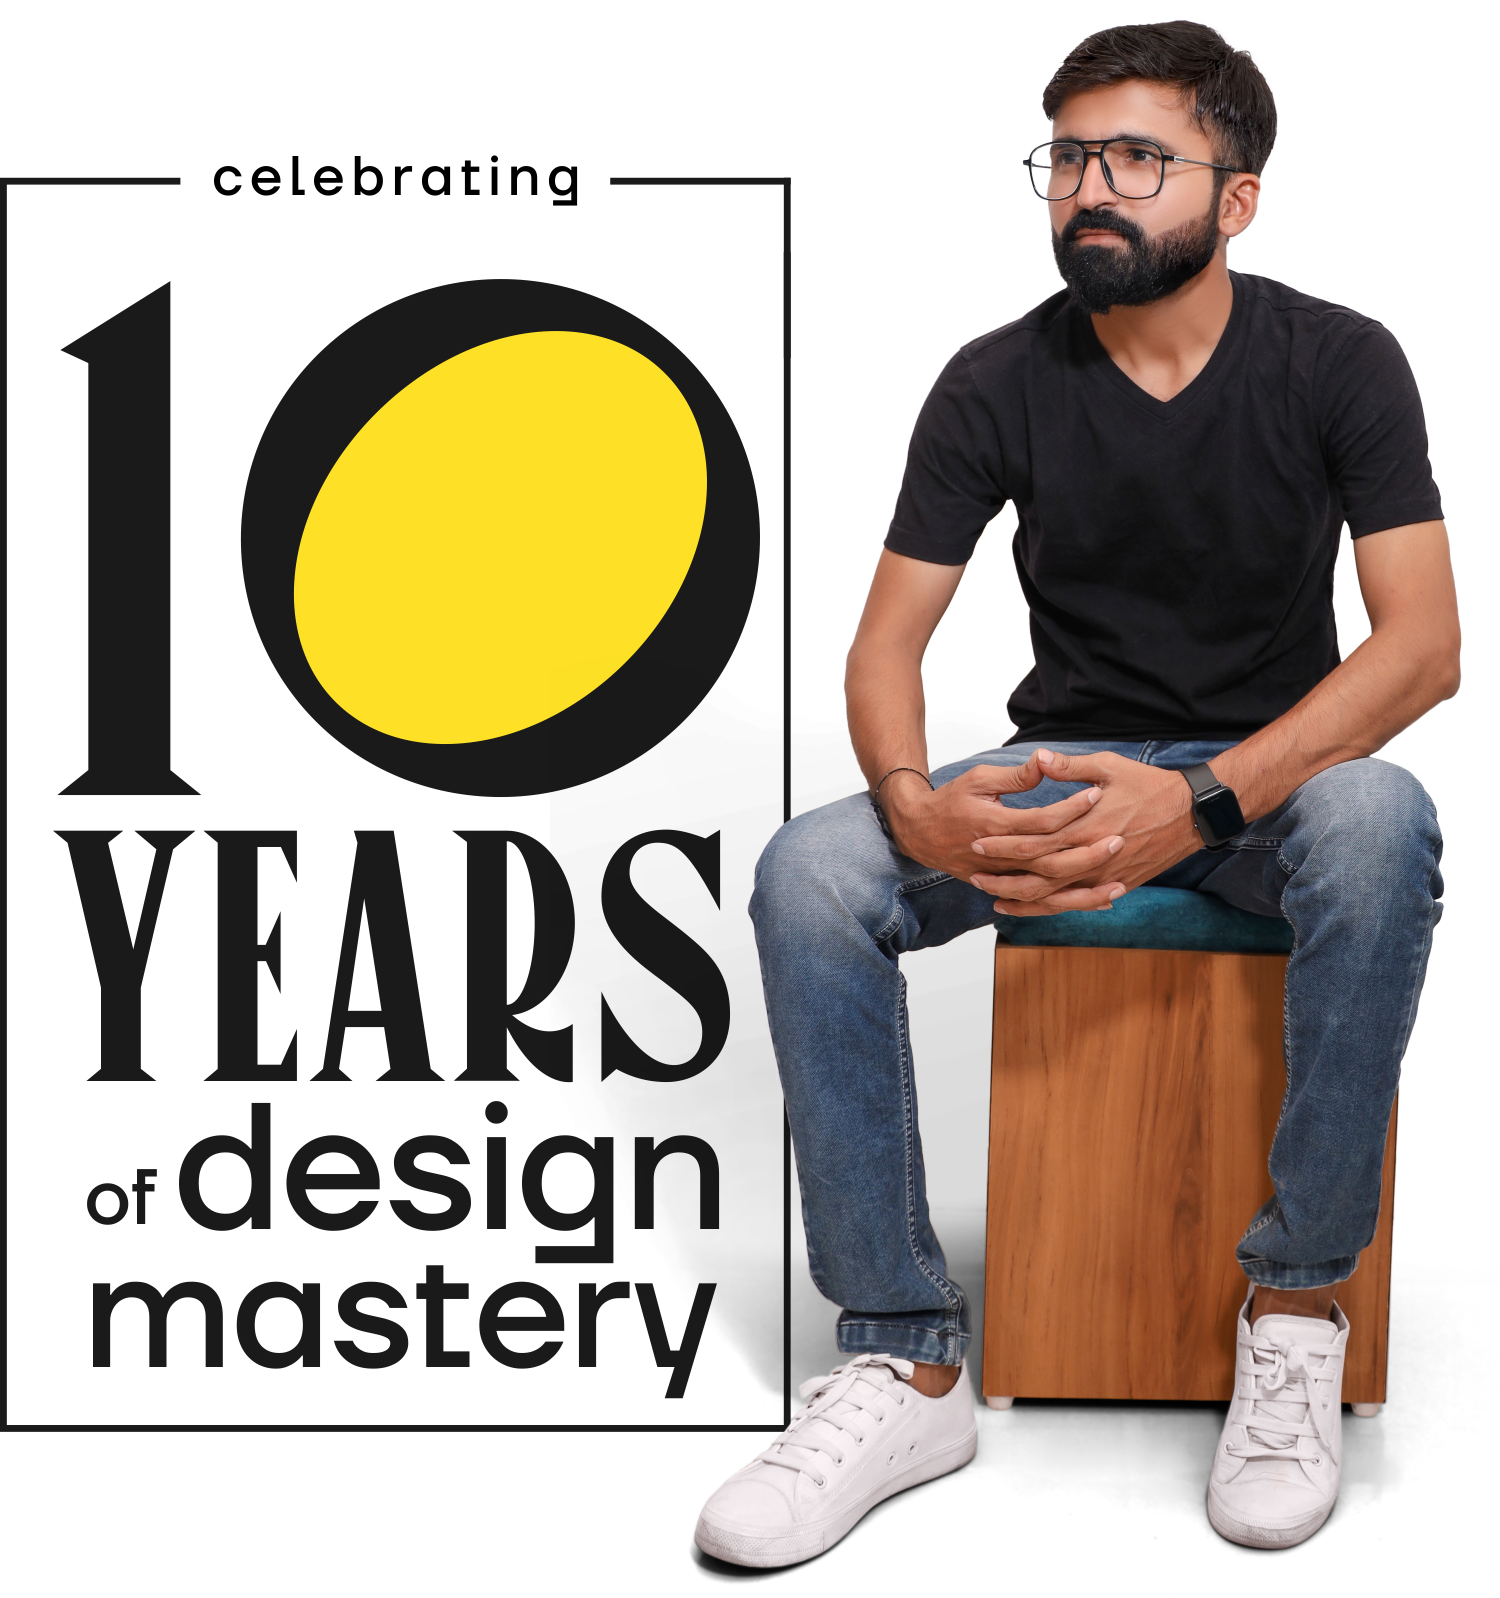 10 Years of Design Mastery